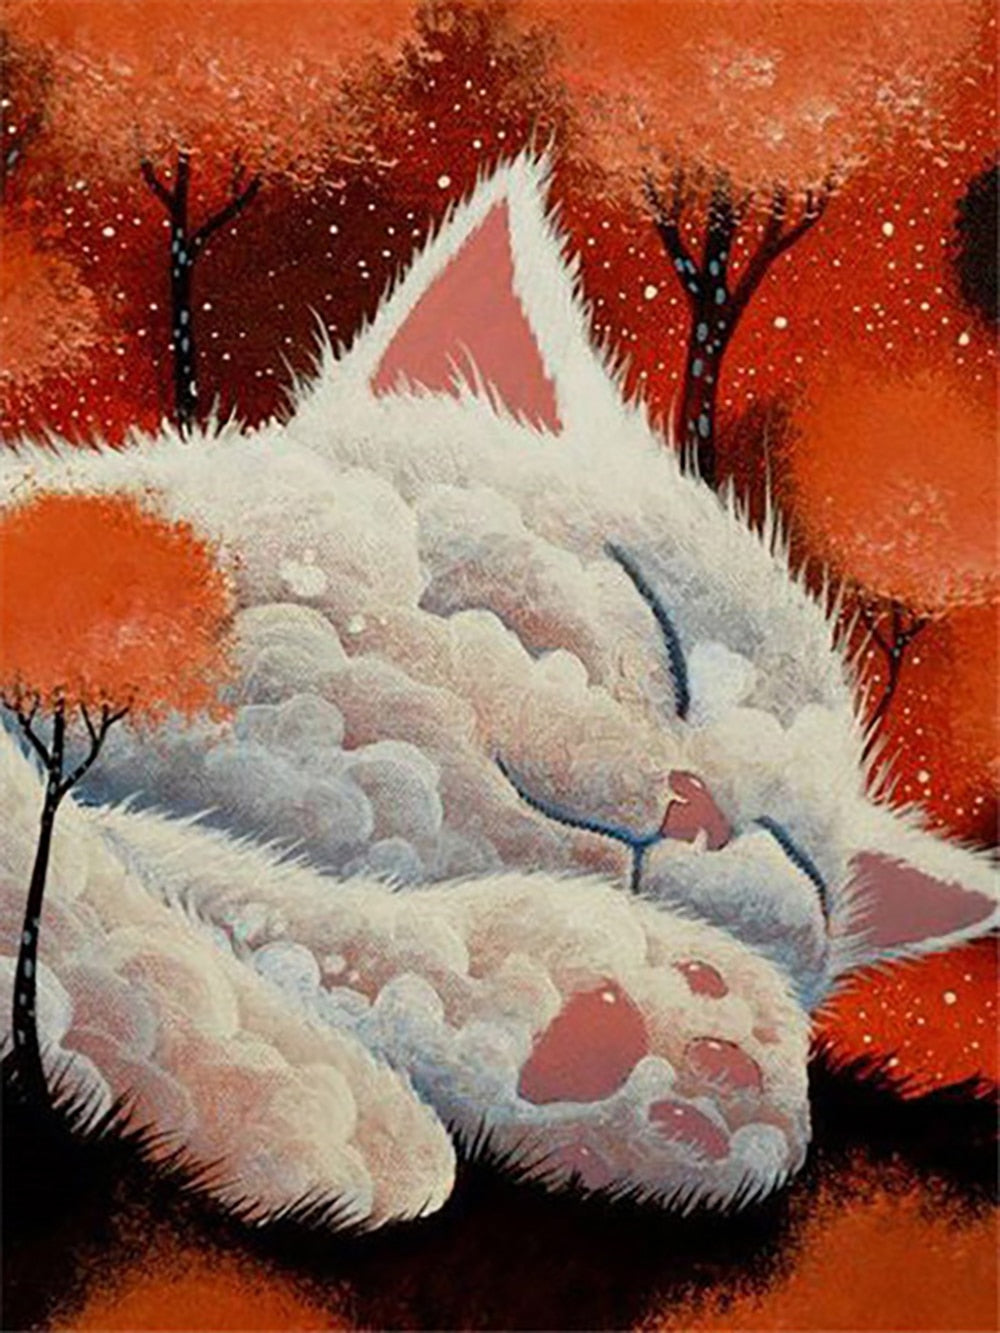 Neo Coon Cat Serenade“ - Cat Diamond Painting Kit - YLJ Art Shop